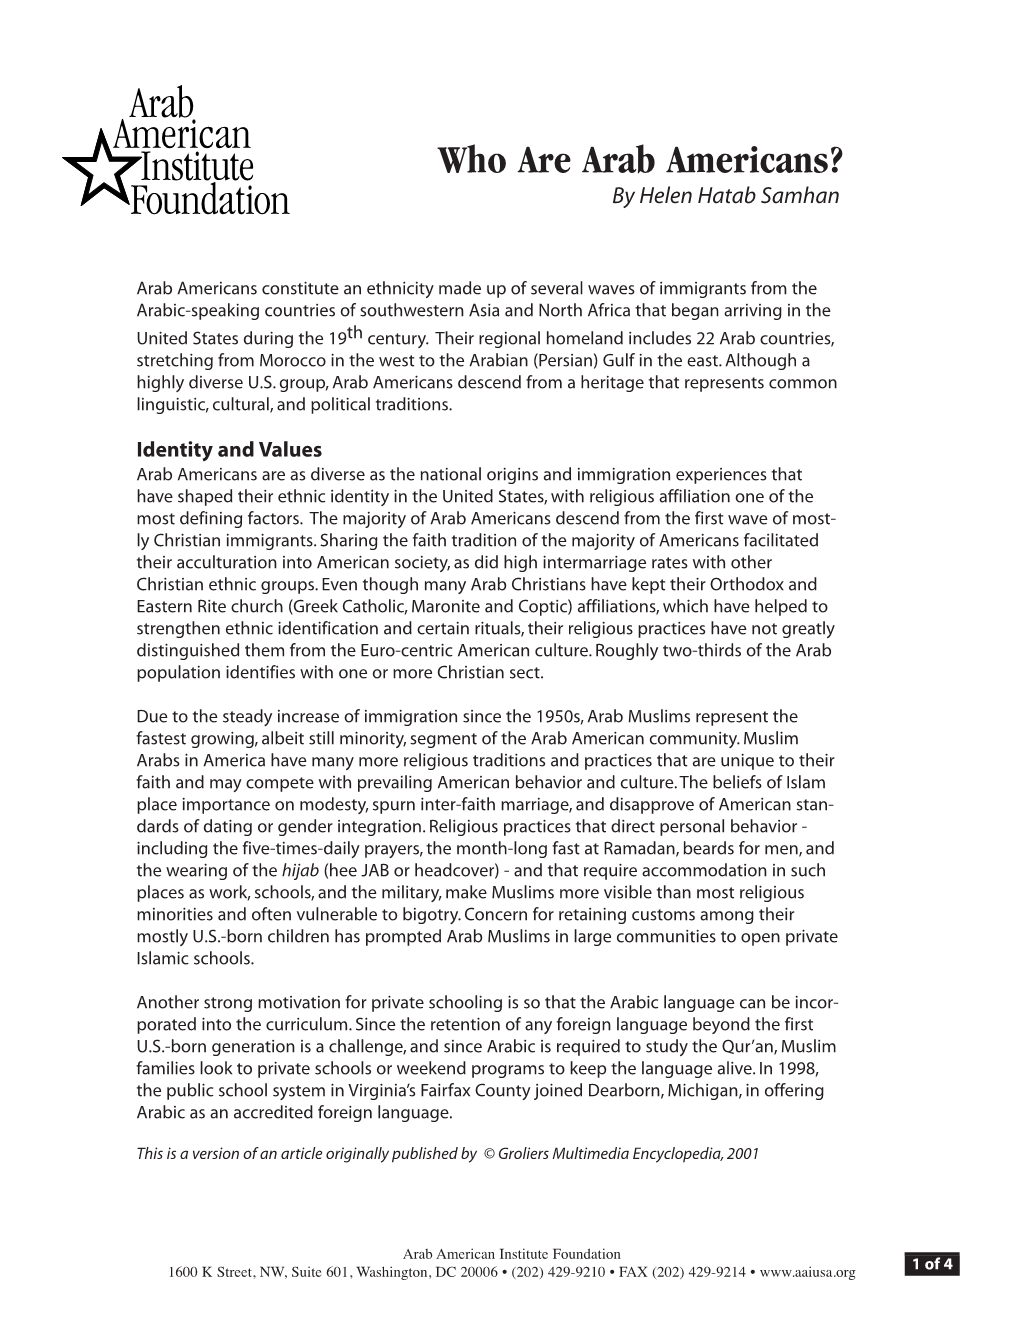 Who Are Arab Americans? by Helen Hatab Samhan